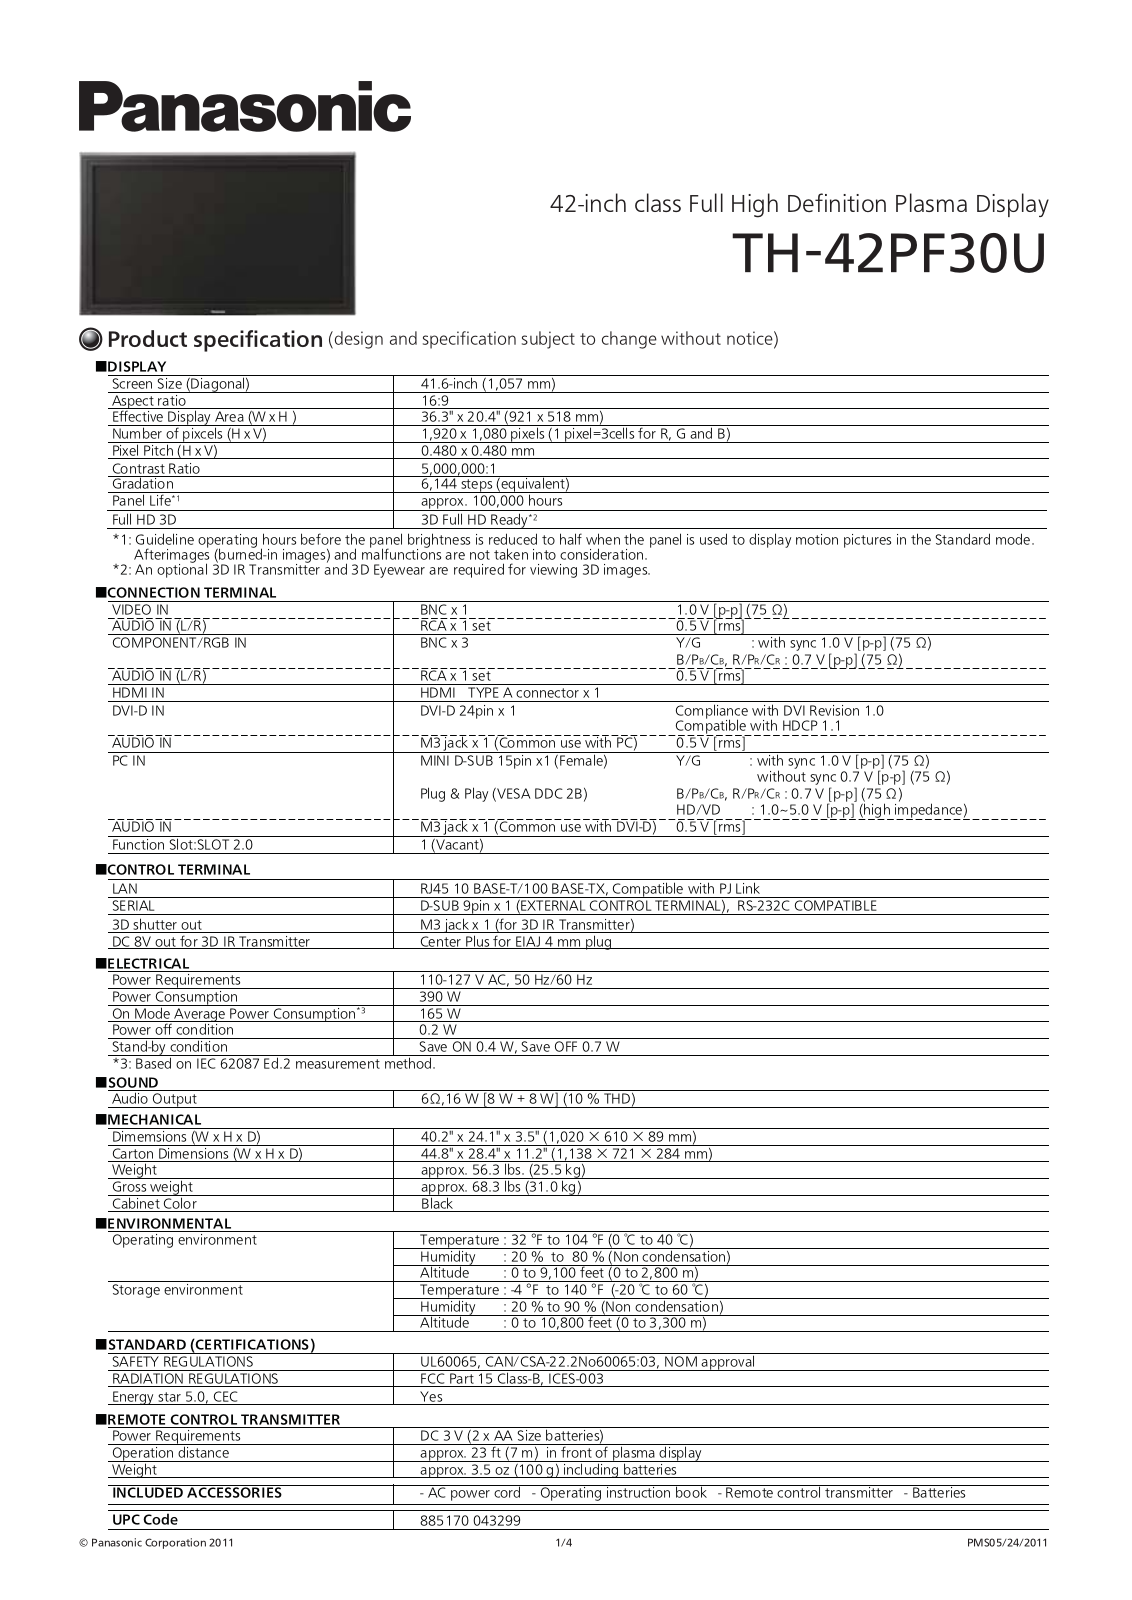 Panasonic TH-42PF30U Specification